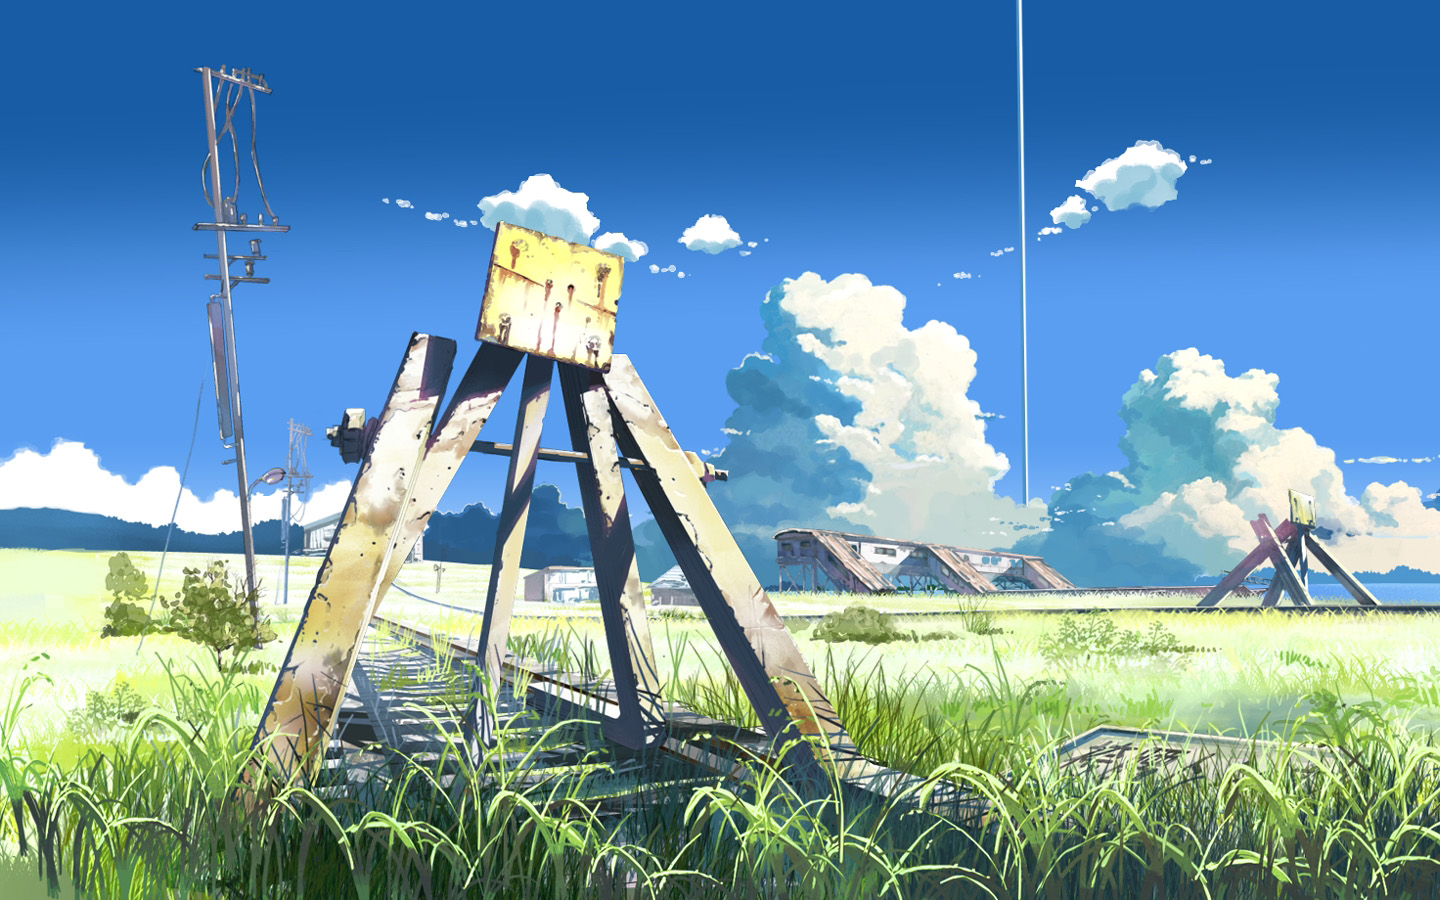 Ghibli Wallpaper HD Joy Studio Design Gallery Best